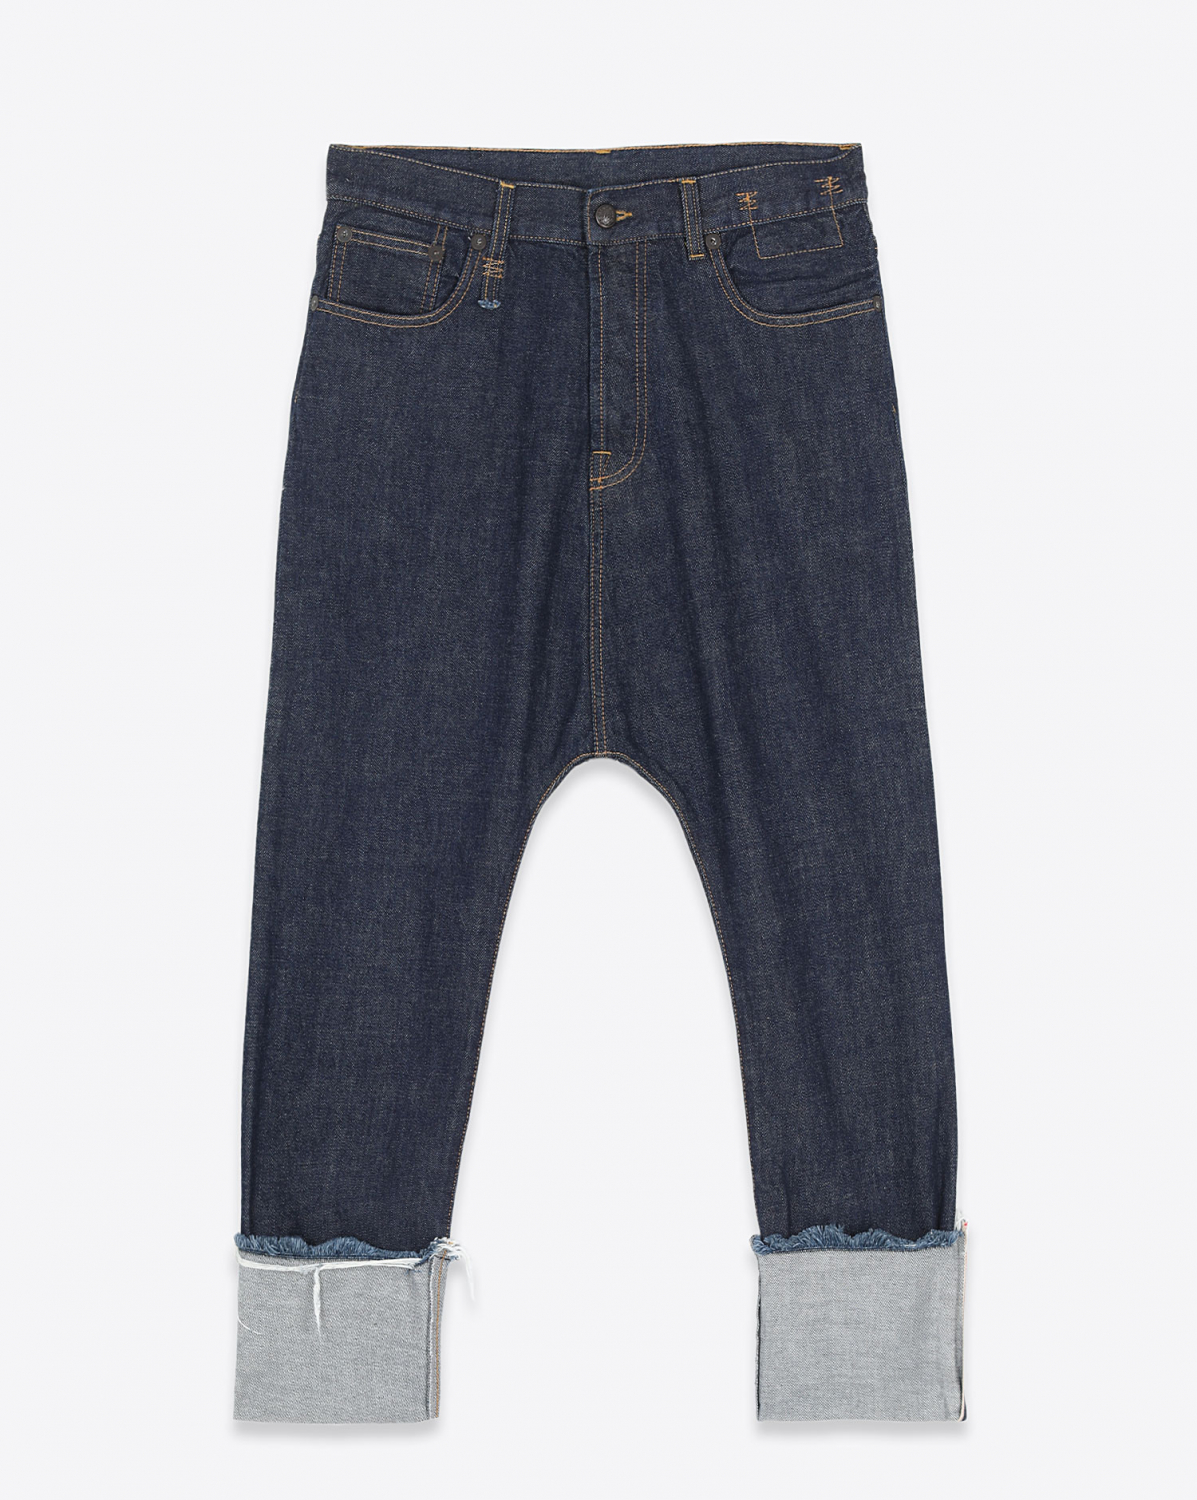 Jeans R13 Denim Collection Tailored Drop W/Cuff - Indigo Rinse